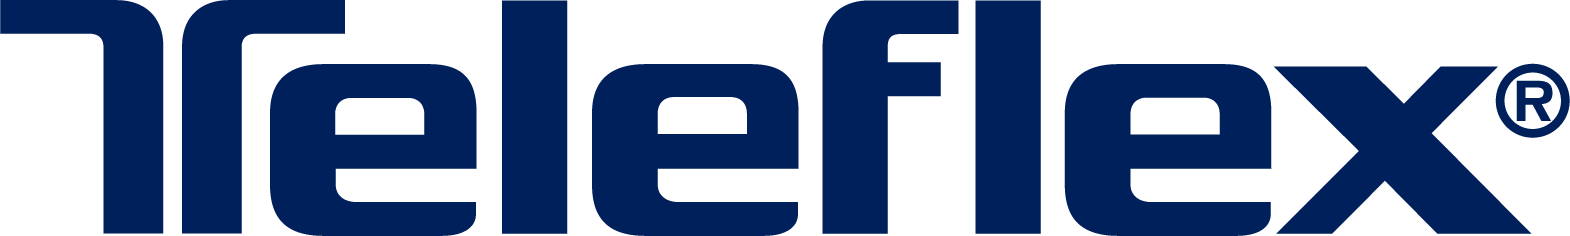 teleflex-logo